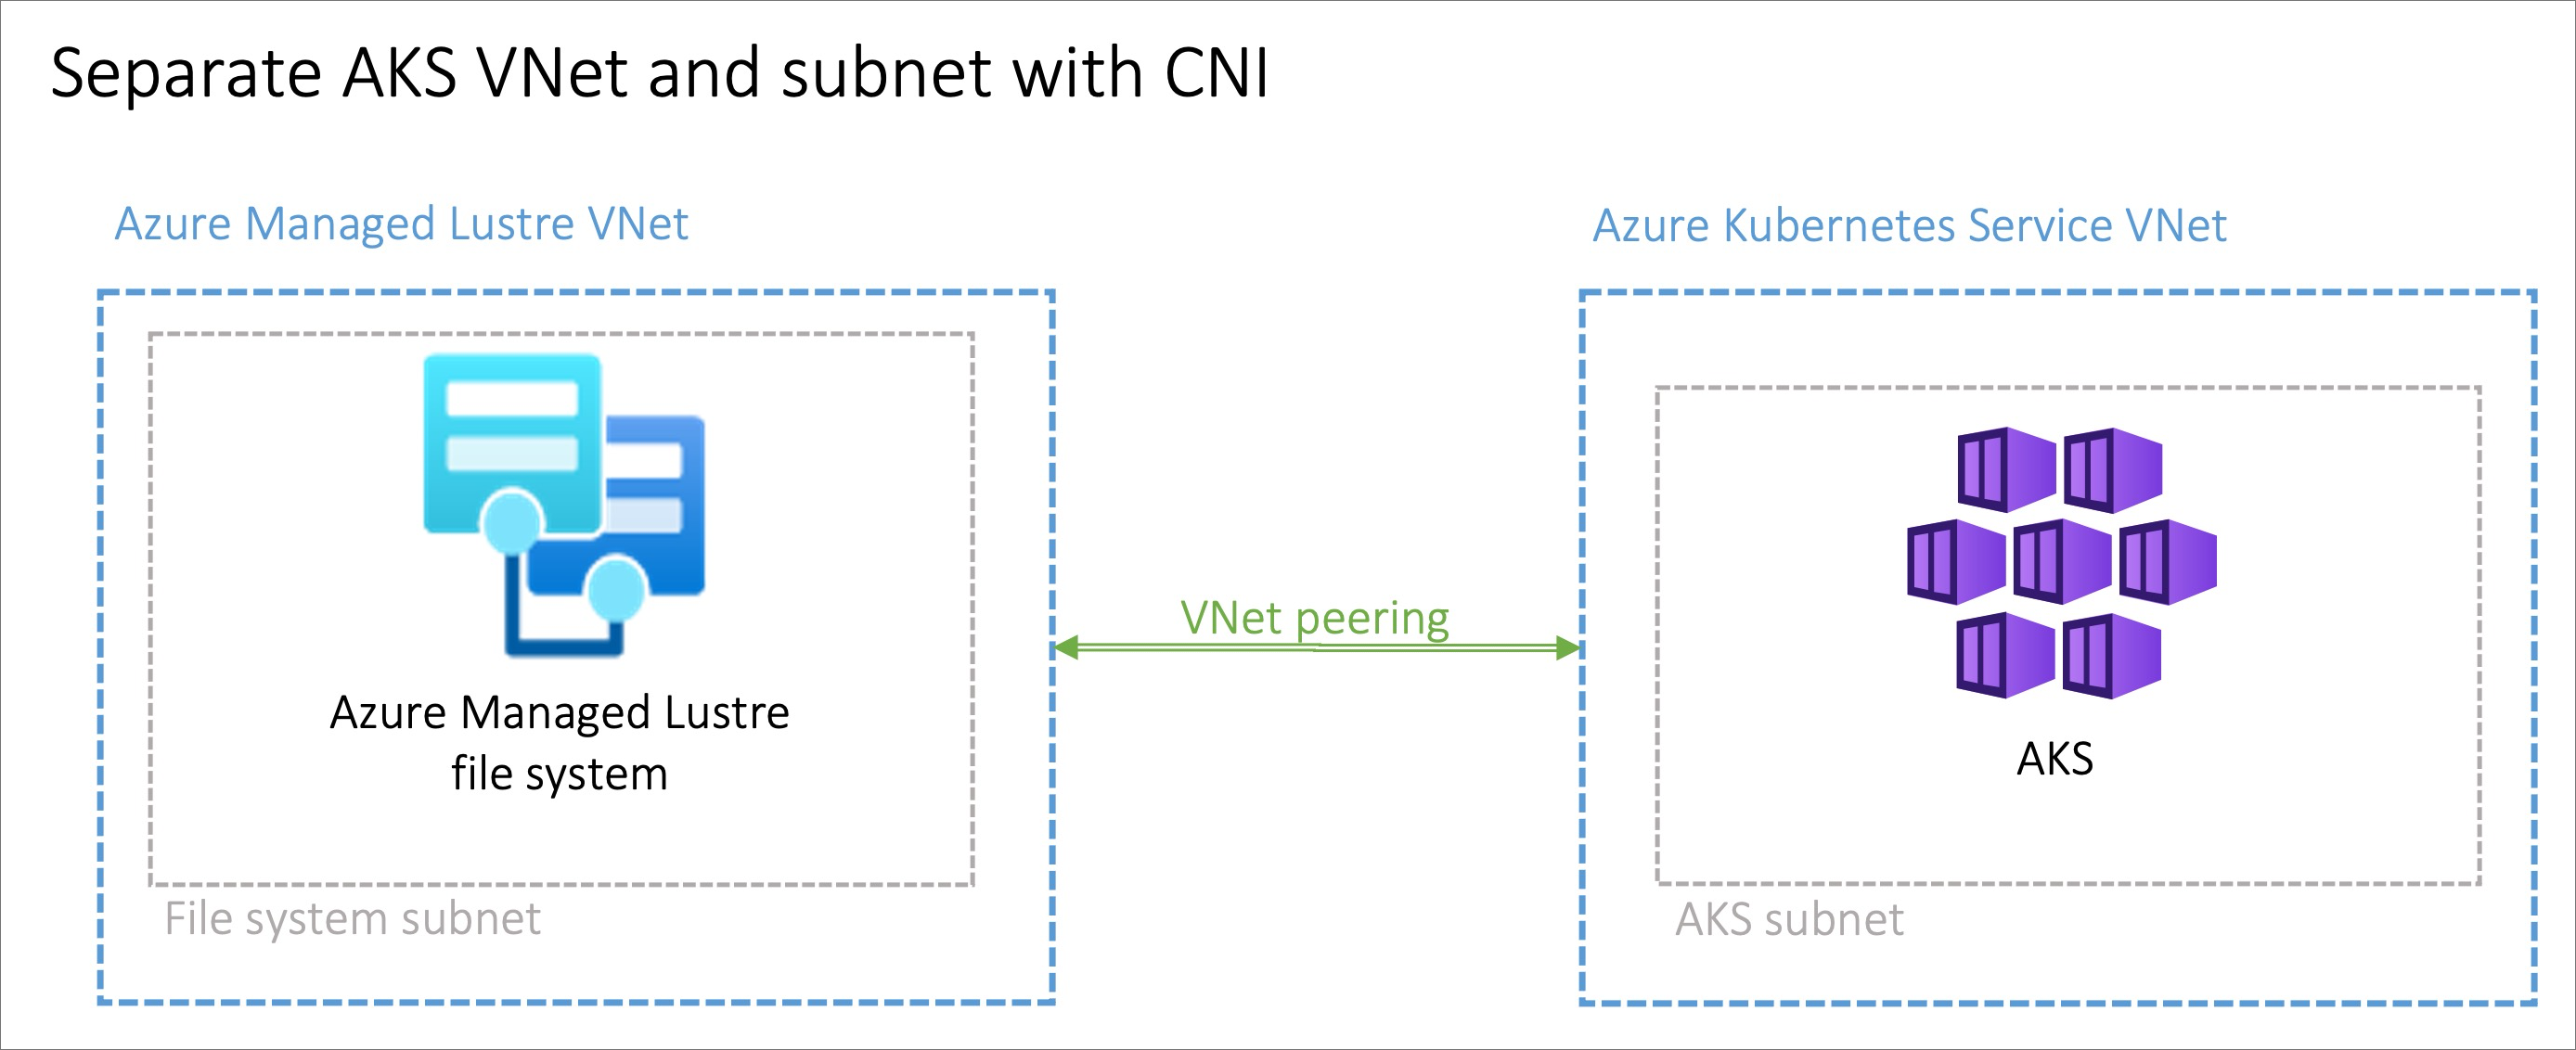 Azure Managed Lustre 用と AKS 用の 2 つの VNet と、それらを接続する VNet ピアリング矢印を示す図。